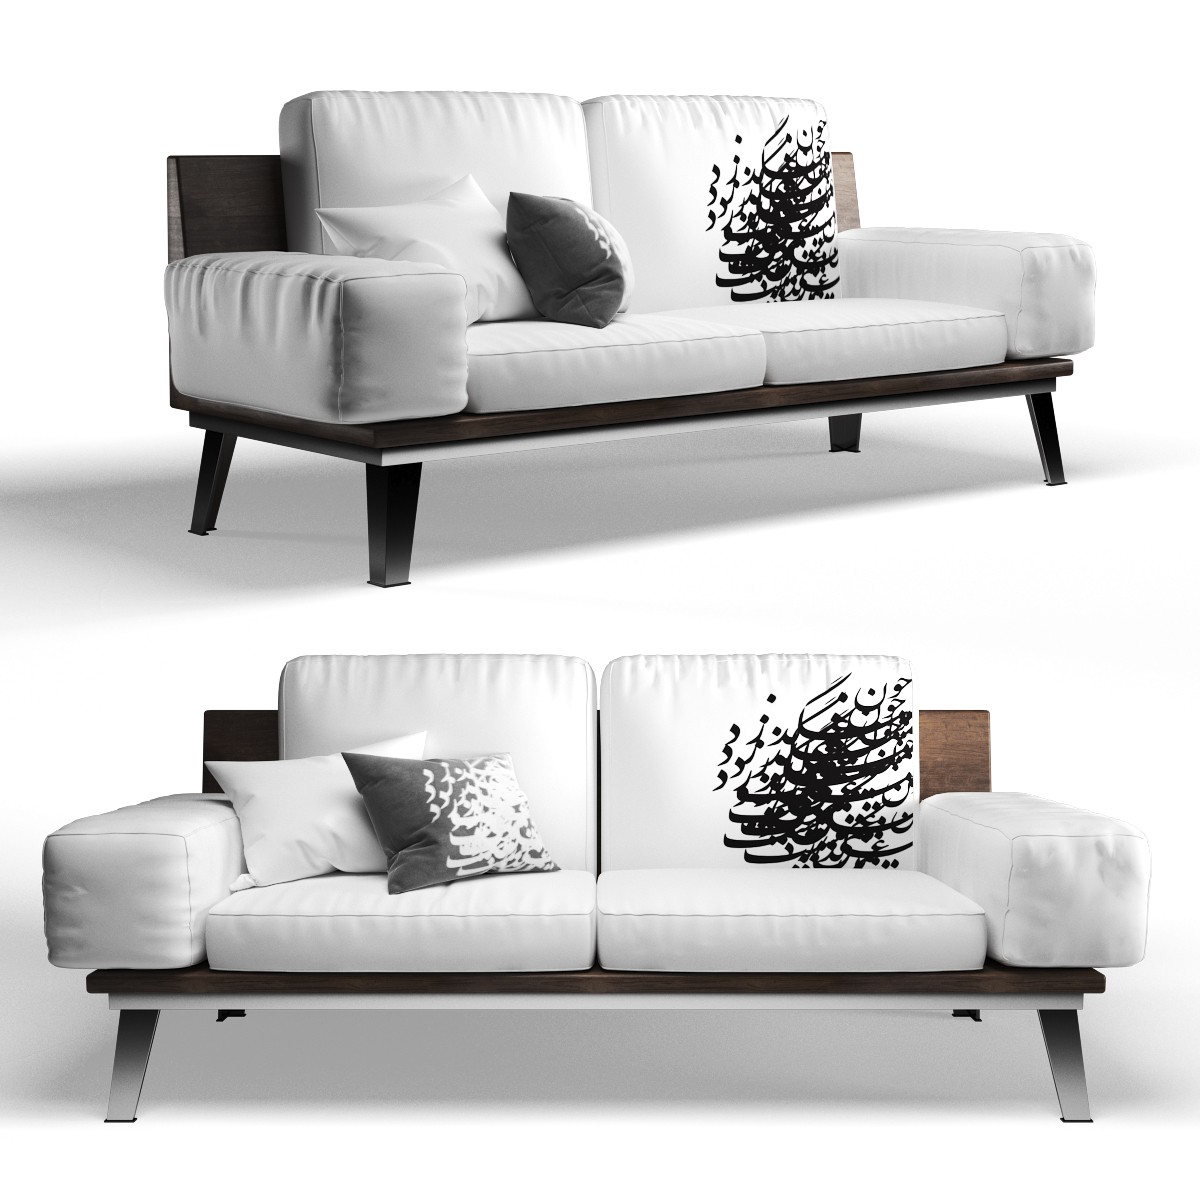 Persian modern style sofa FREE model